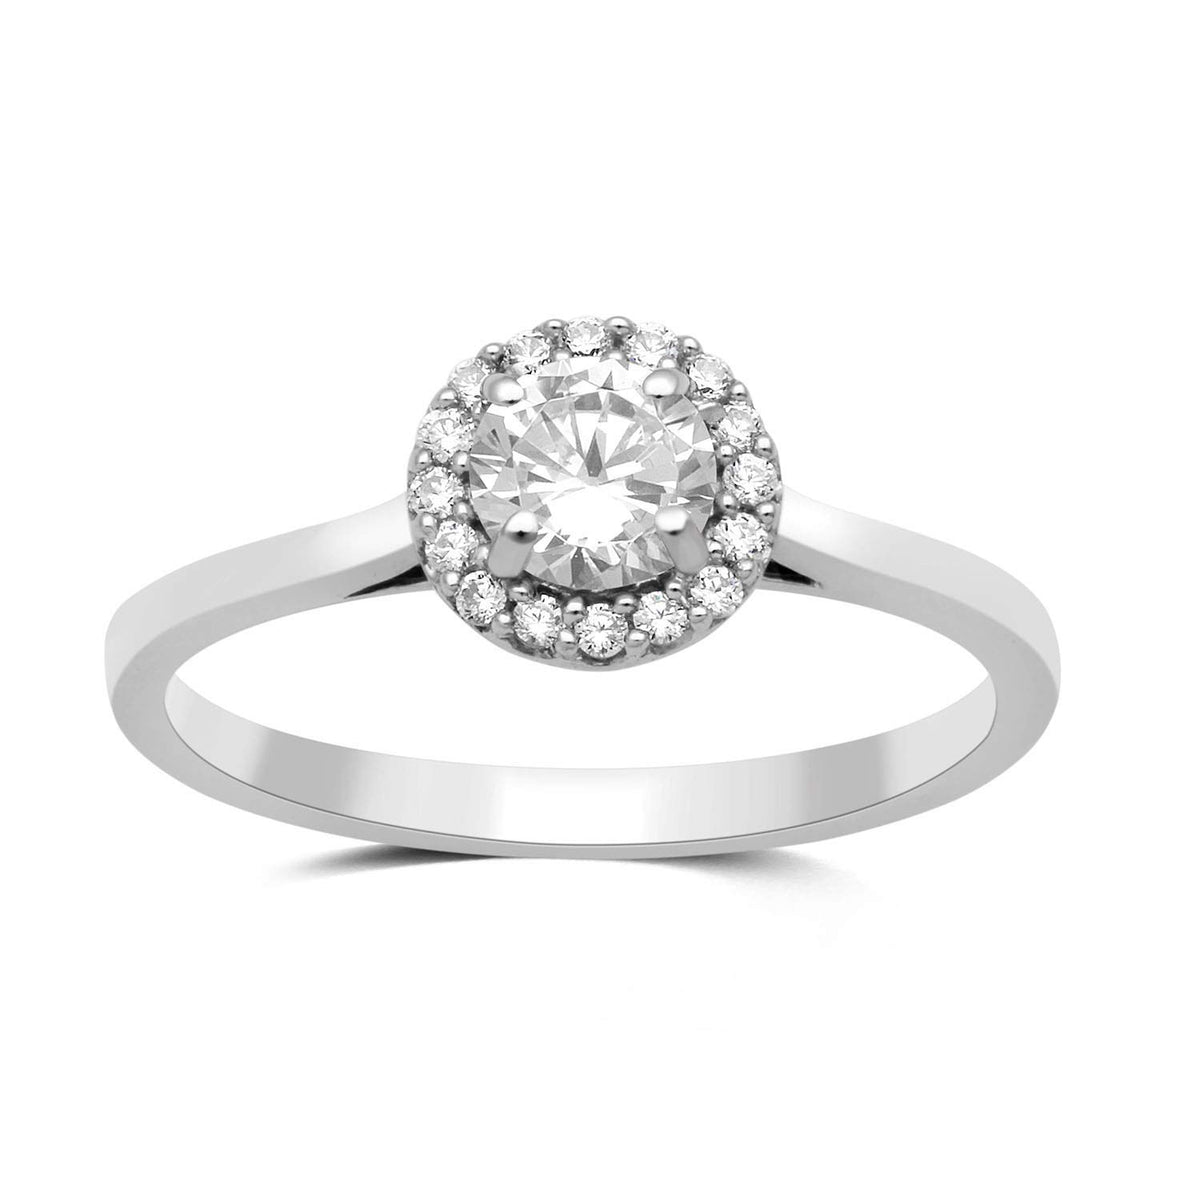 Jewelili Round Opal Diamond Cubic Zirconia Ring Sterling Silver Jewelry